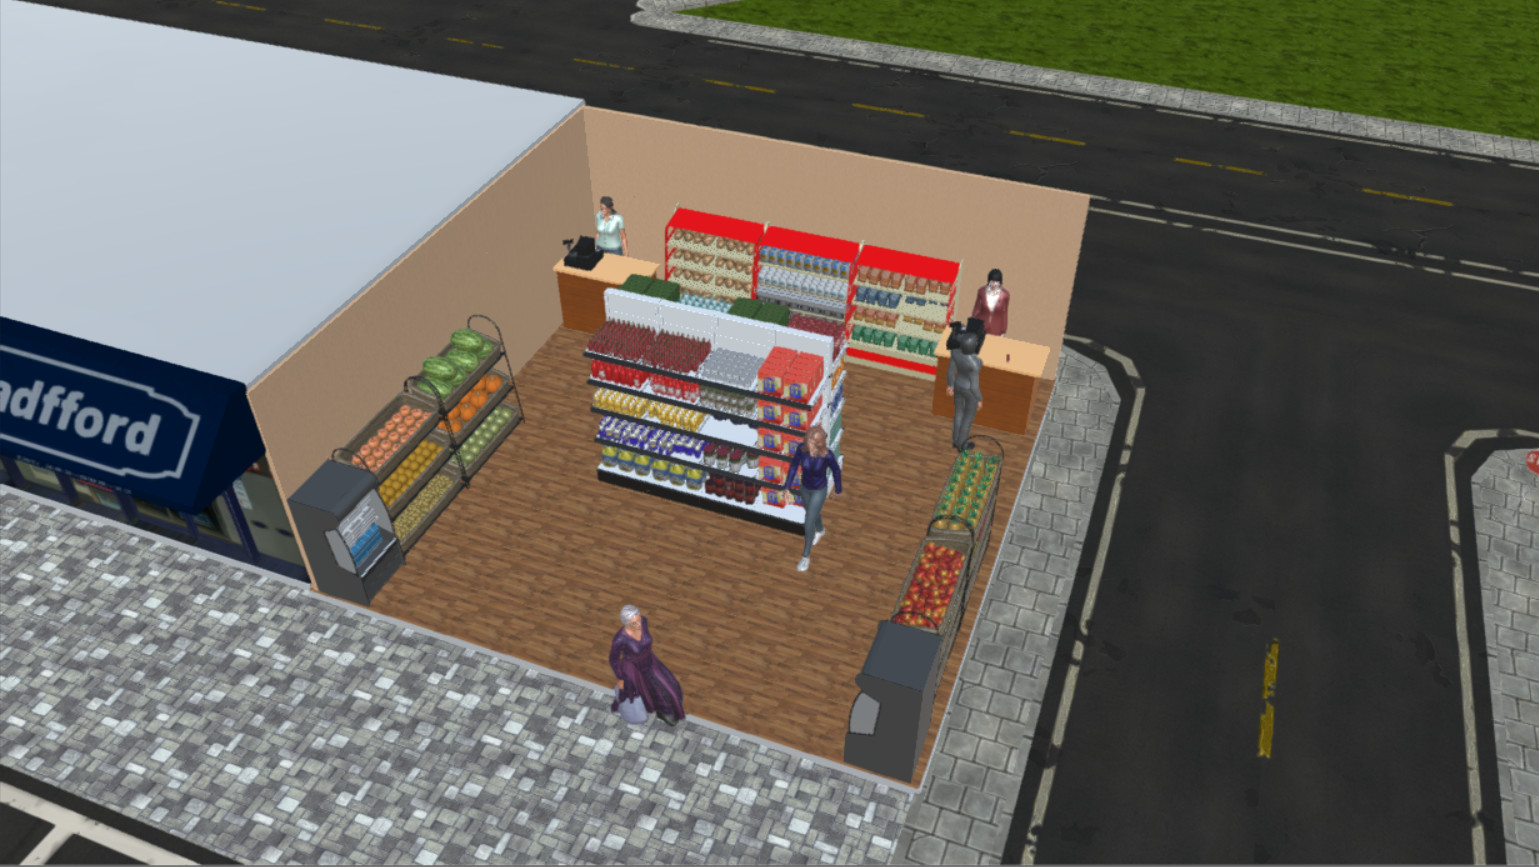 Supermarket simulator 0.1 2.2. Симулятор магазина тайкон. Симулятор магазина 2д. Симулятор продуктового магазина. Симулятор торгового центра.